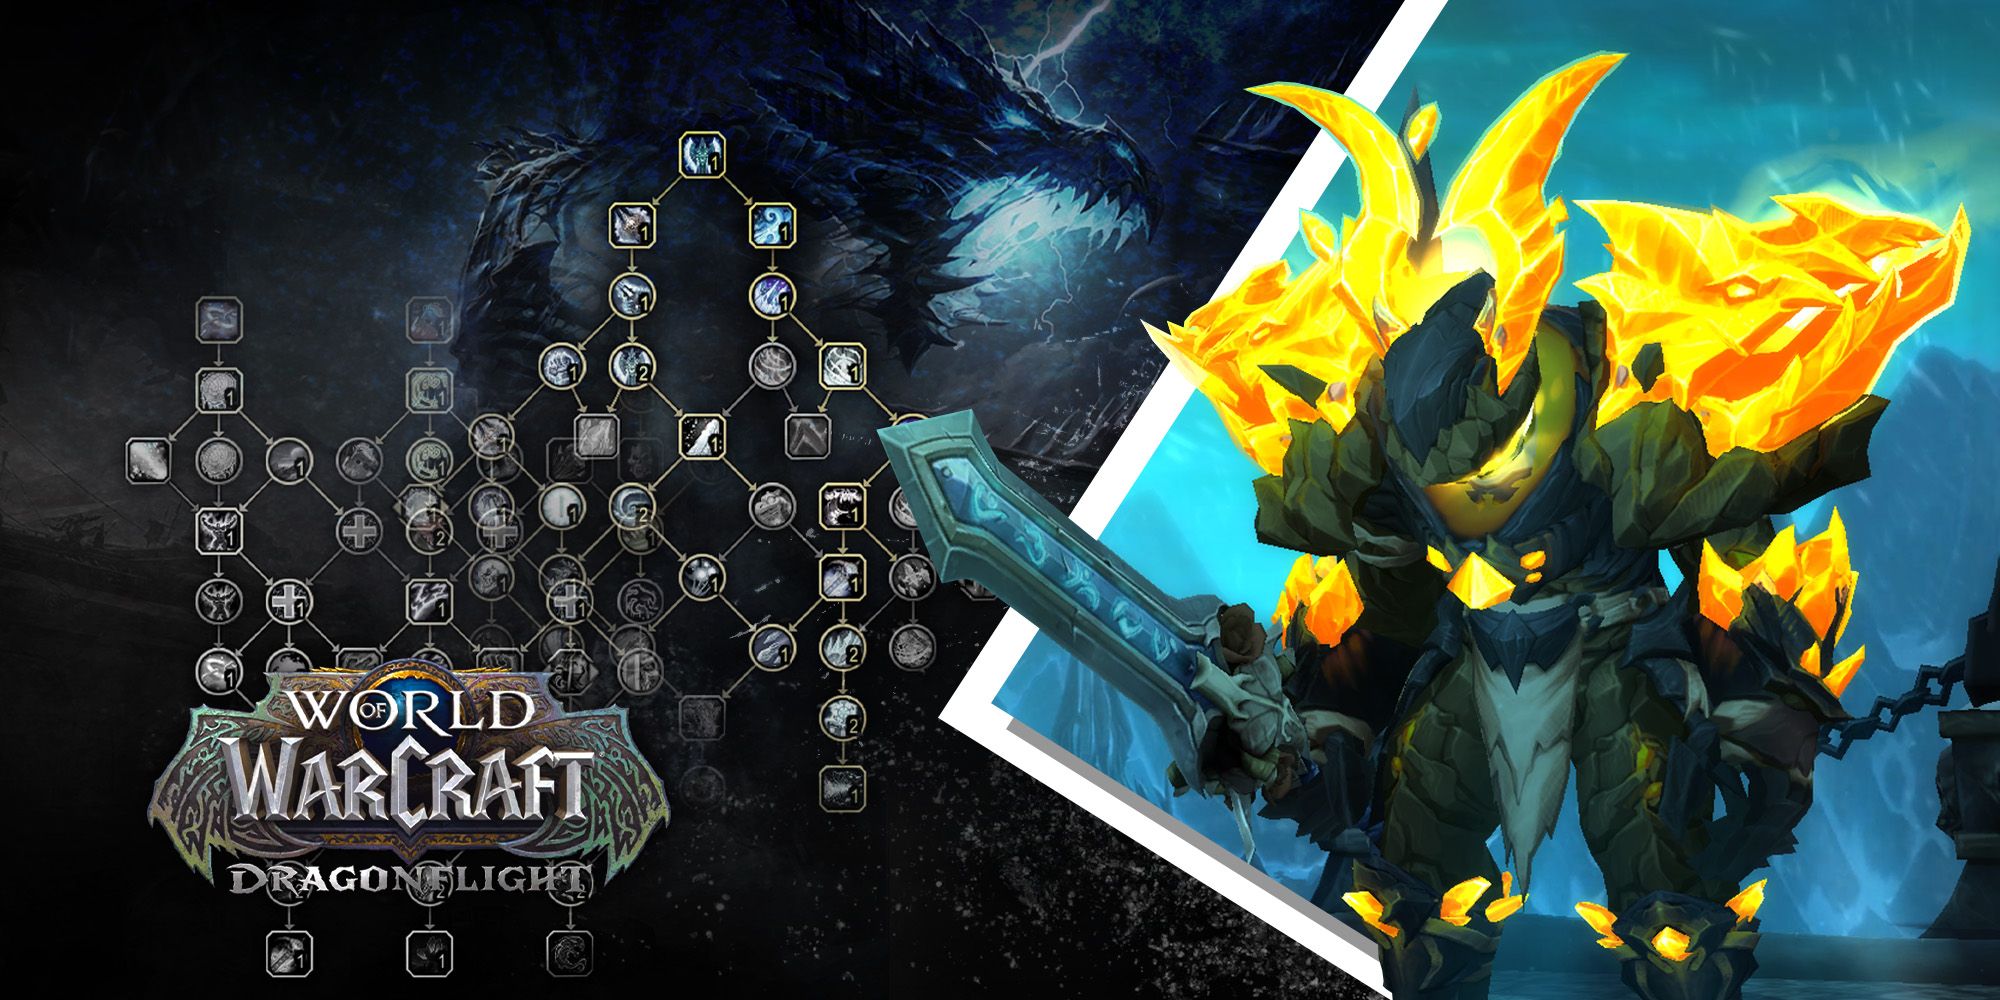 DK SETUP - Tenue - World of Warcraft